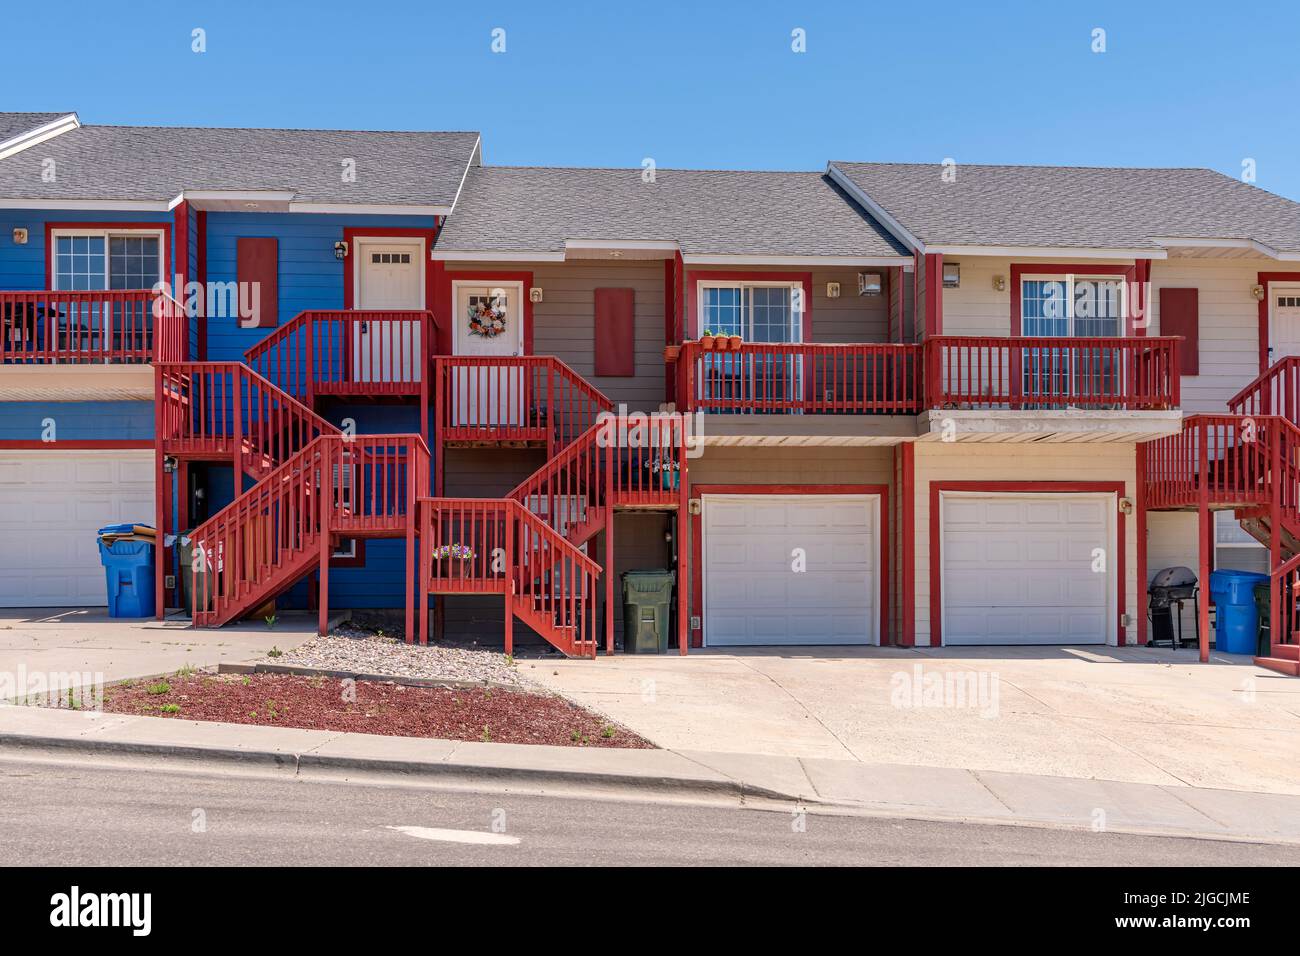 Residential condominiums and neighborhood in a suburb Pocatello Idaho. Stock Photo